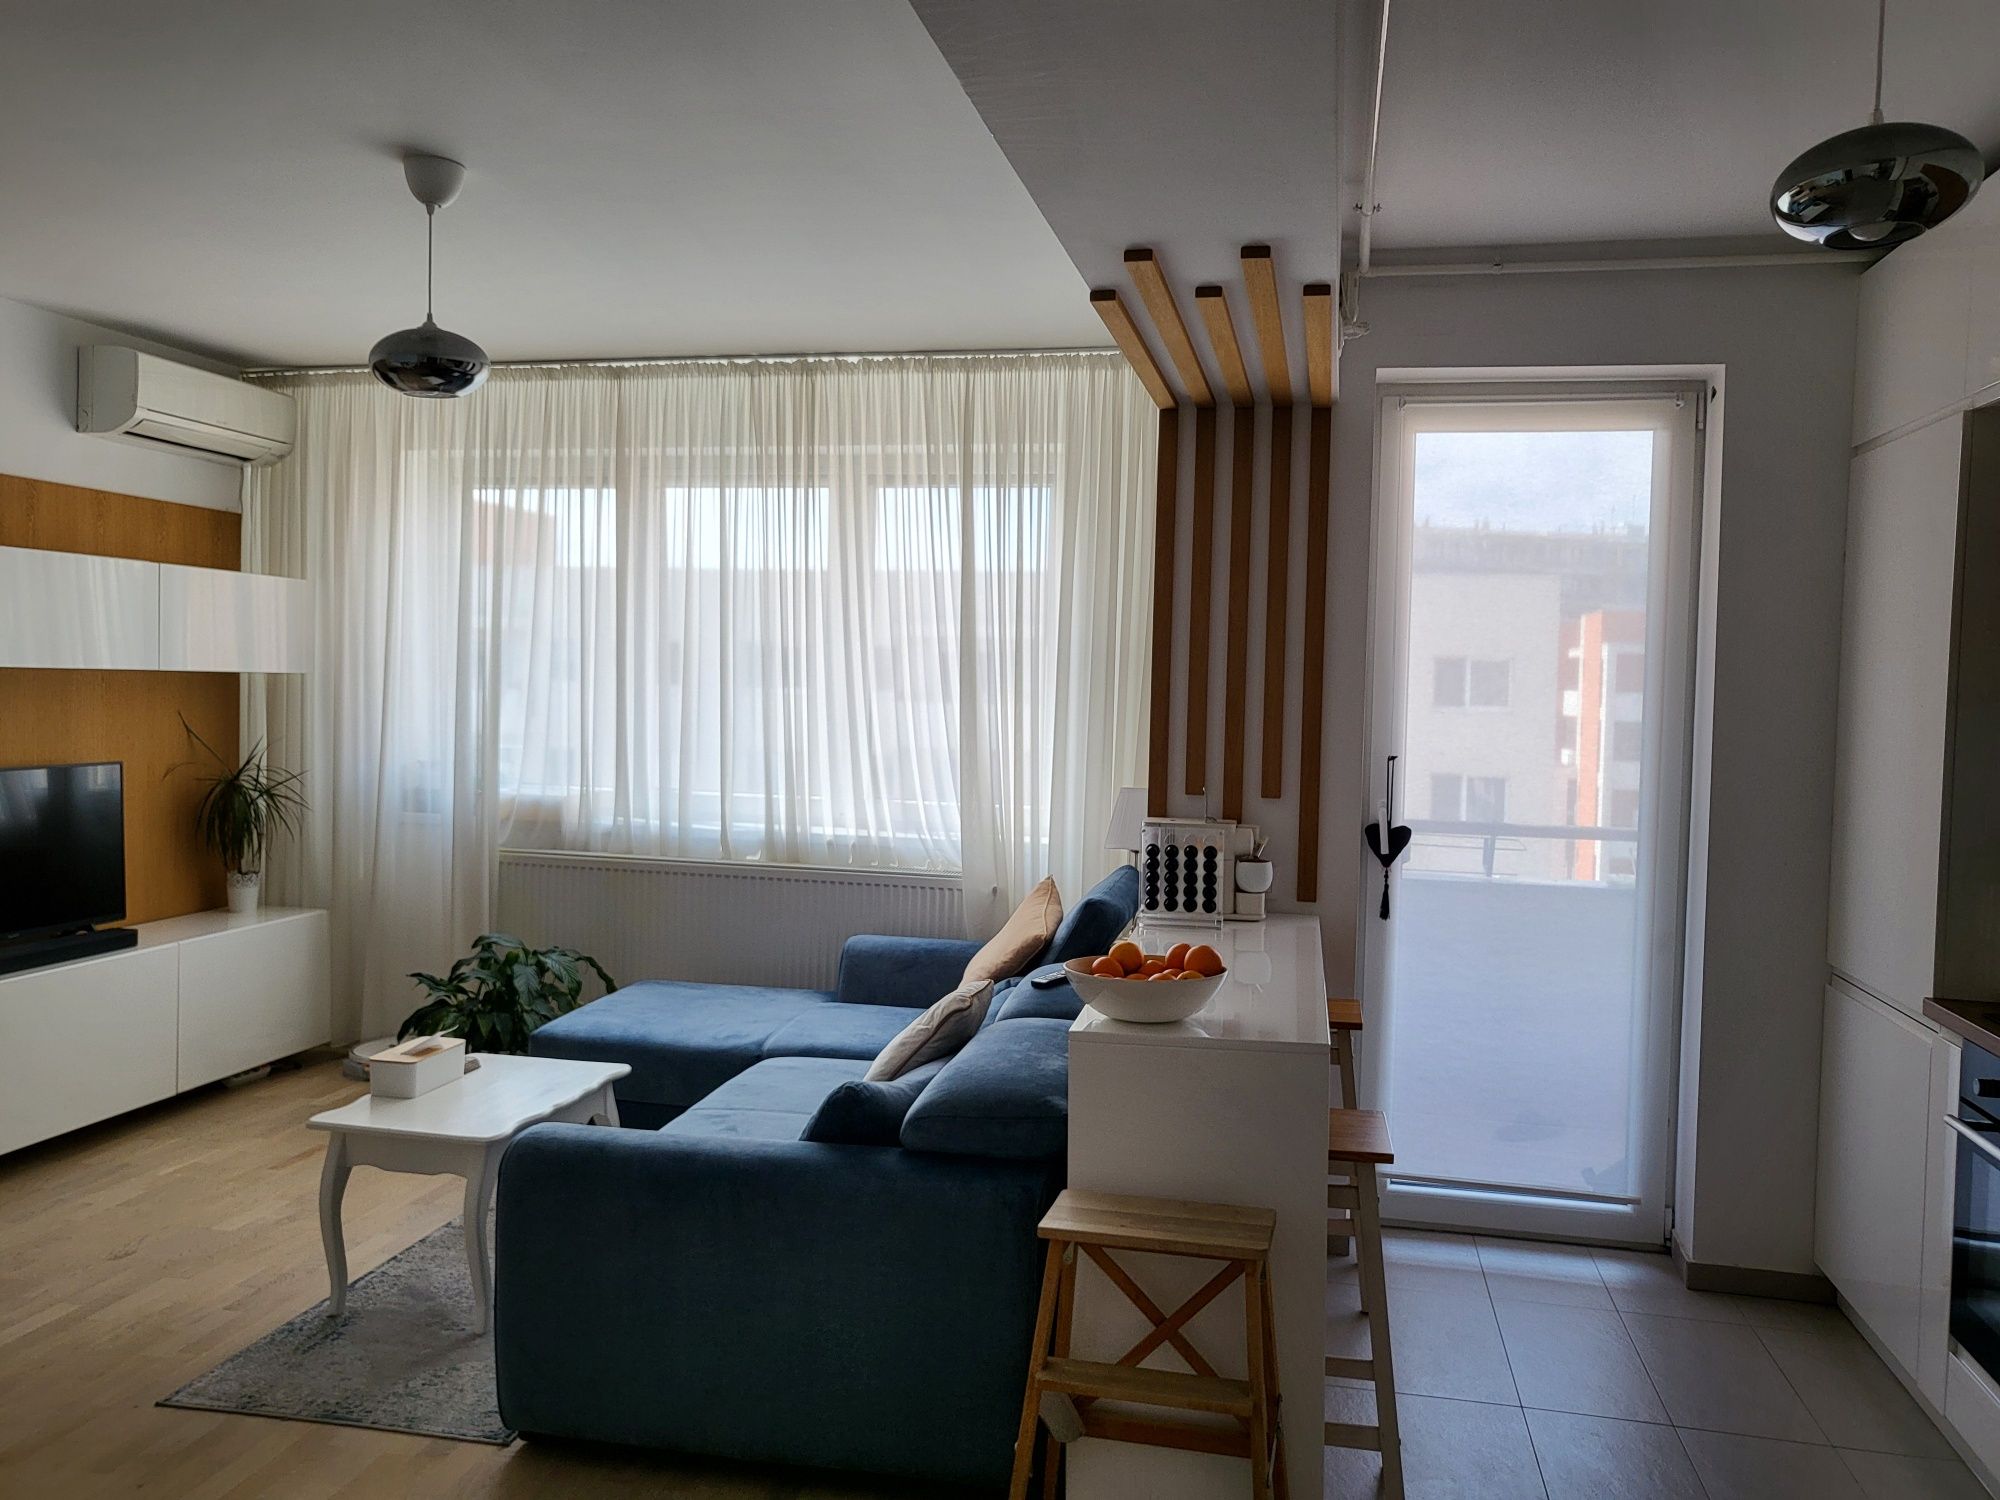 Inchiriez apartament cu 3 camere, bloc nou, Baba Novac - proprietar